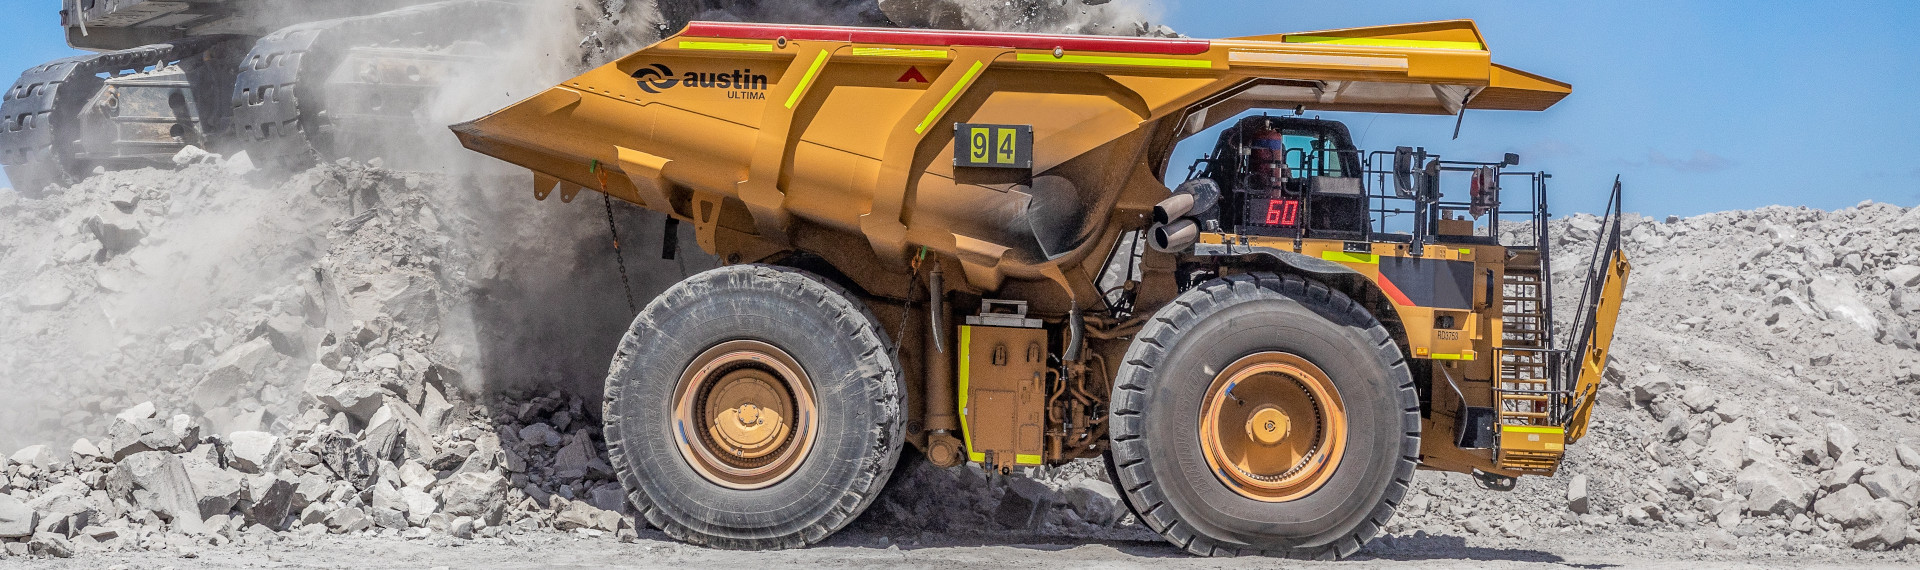 Austin社の超大型掘削トラック、Hardox® 500 Tufで25%の軽量化を実現